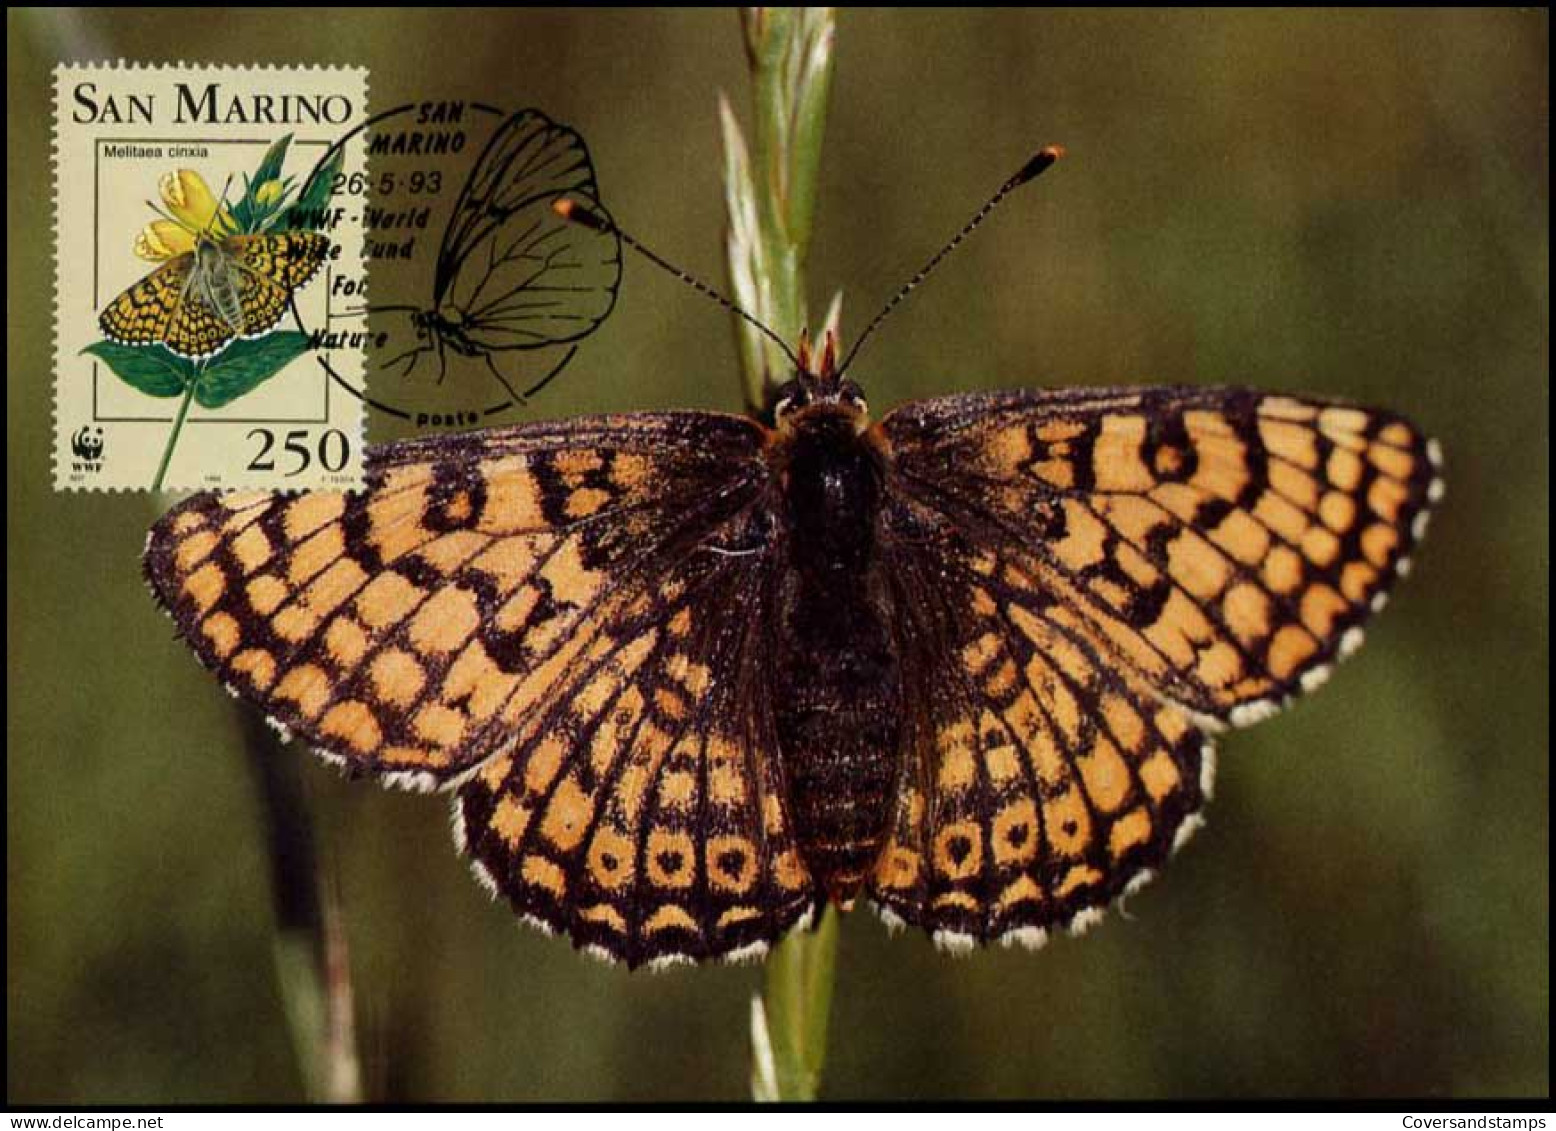  San Marino - MK -  WWF - Glanville Fritillary - Schmetterlinge